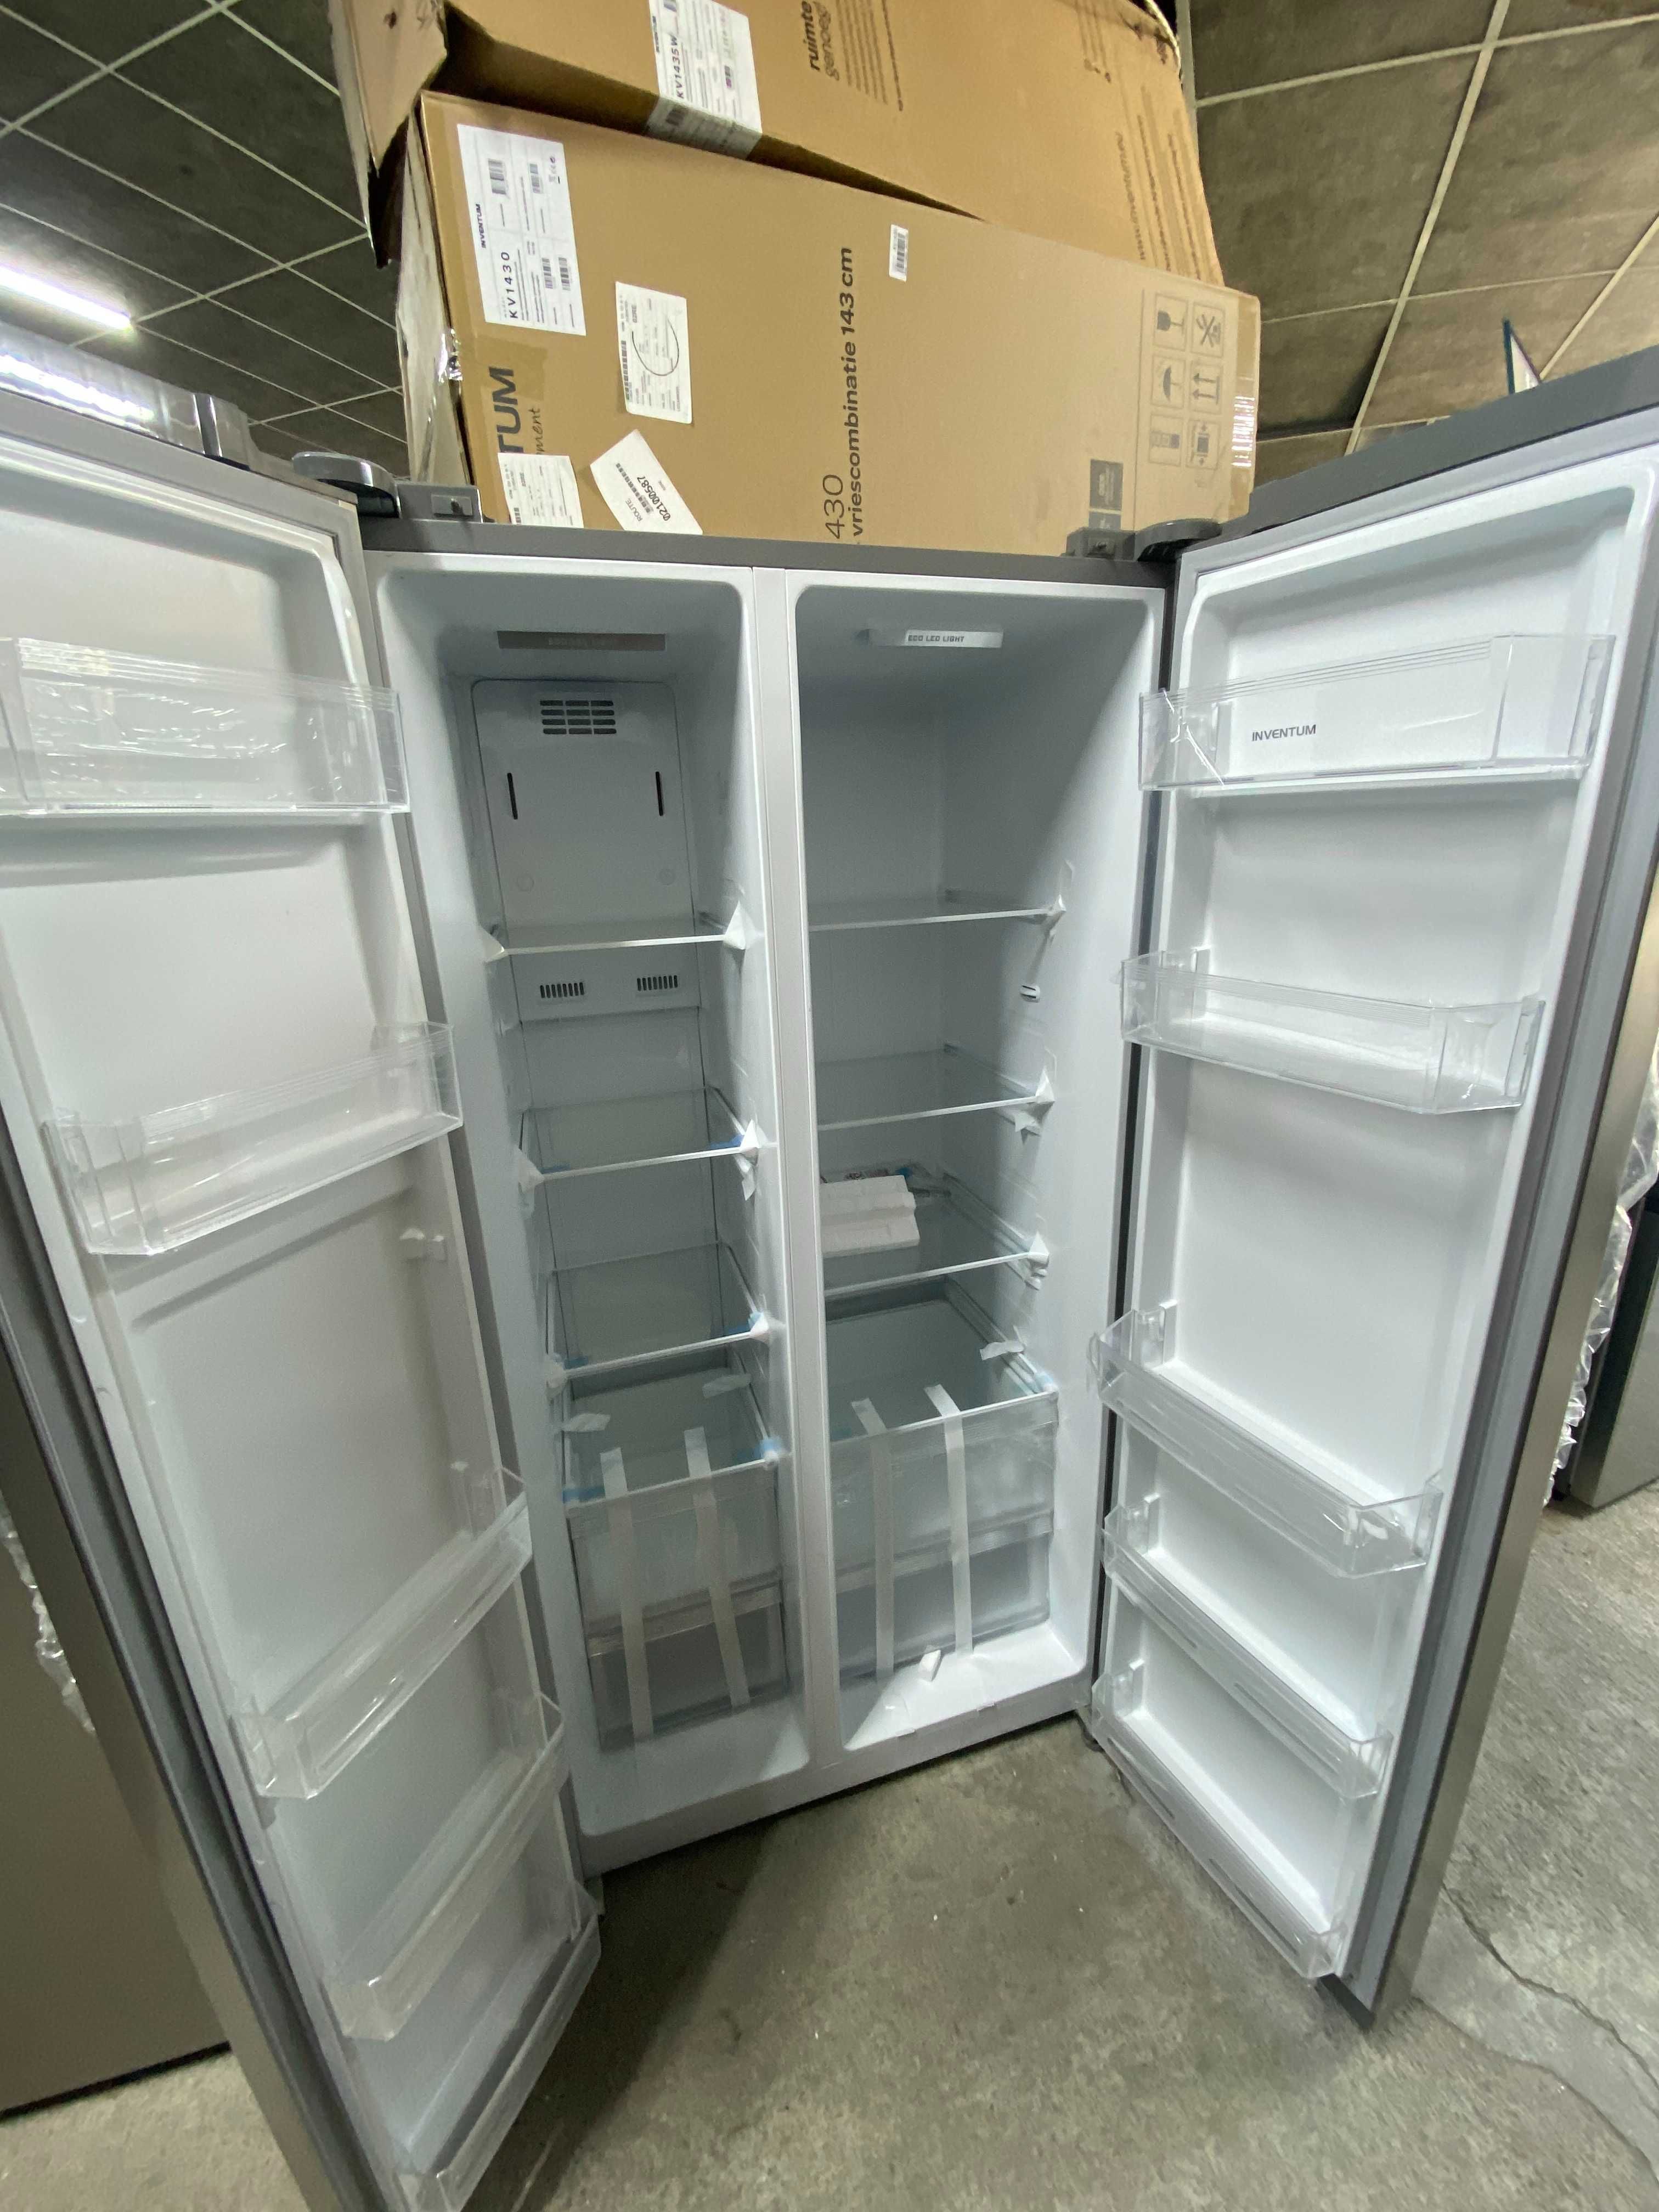 Американски хладилник Инвентум SKV1780R